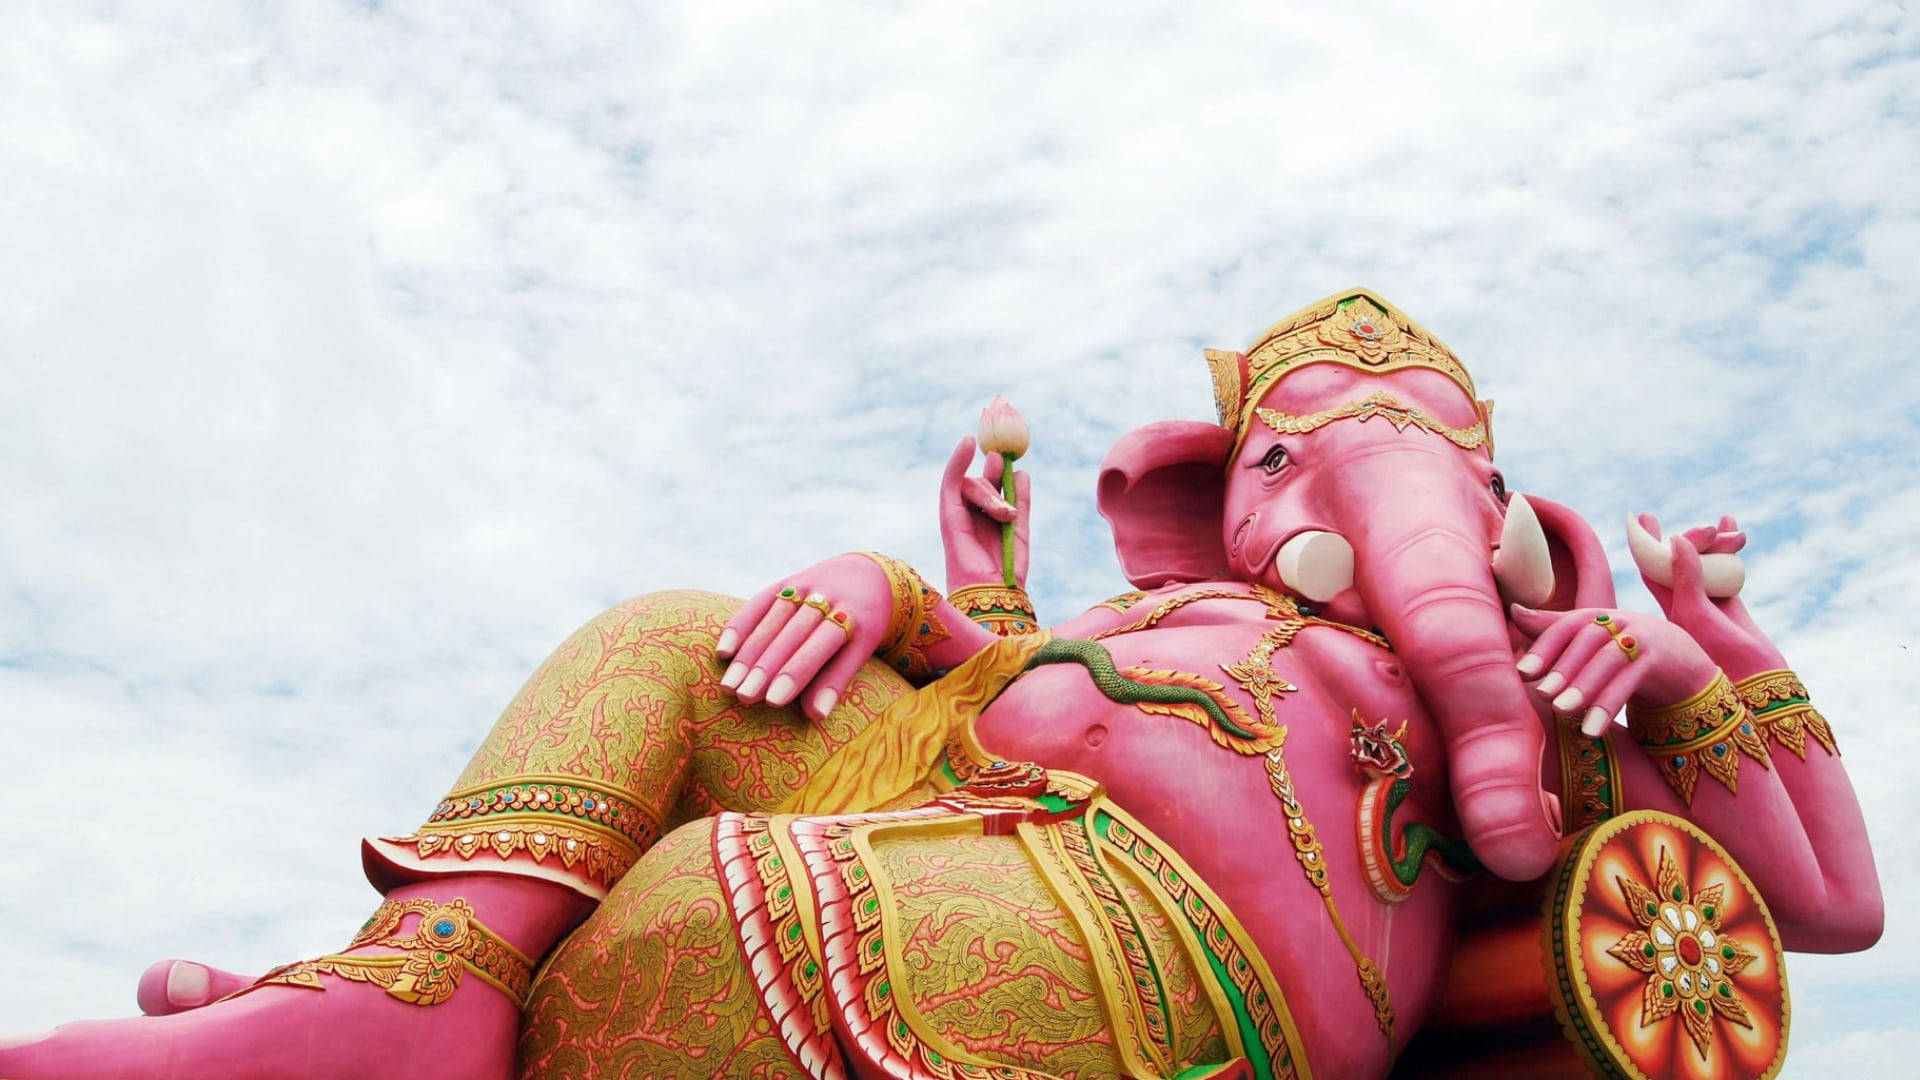 Magnificent Ganesh Statue in Full HD Wallpaper